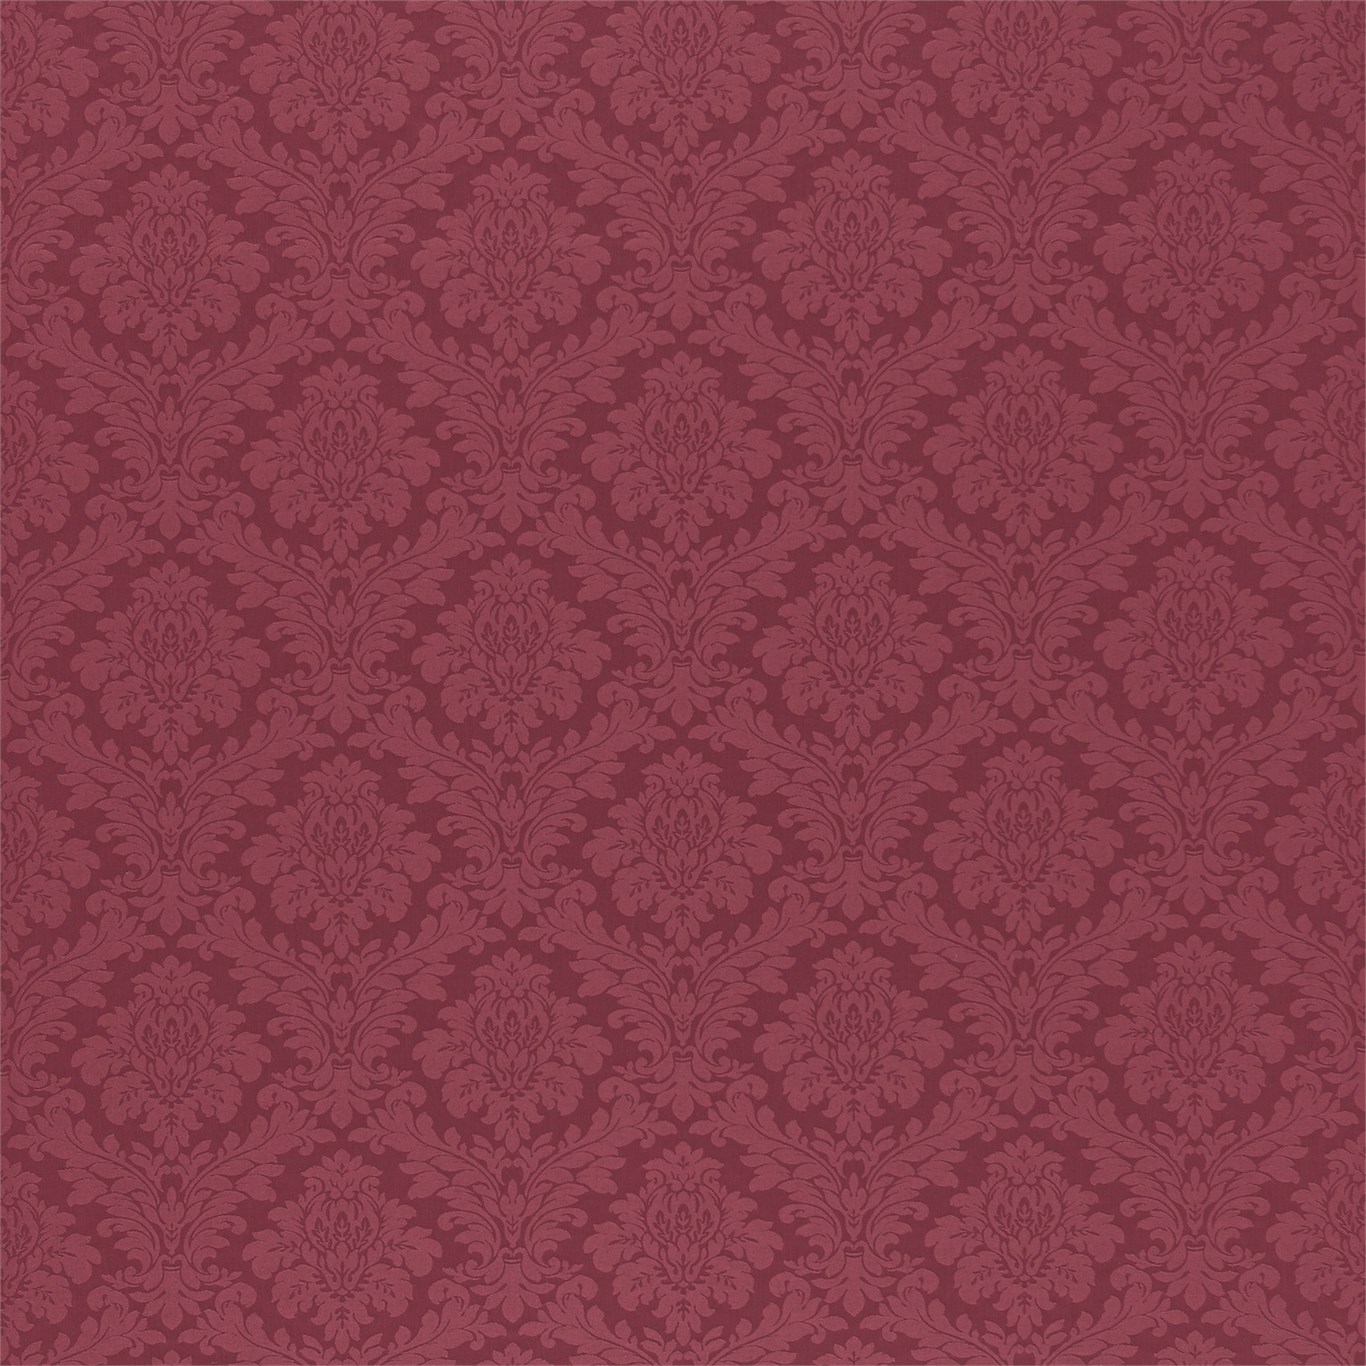 Lymington Damask Raspberry Fabric by SAN